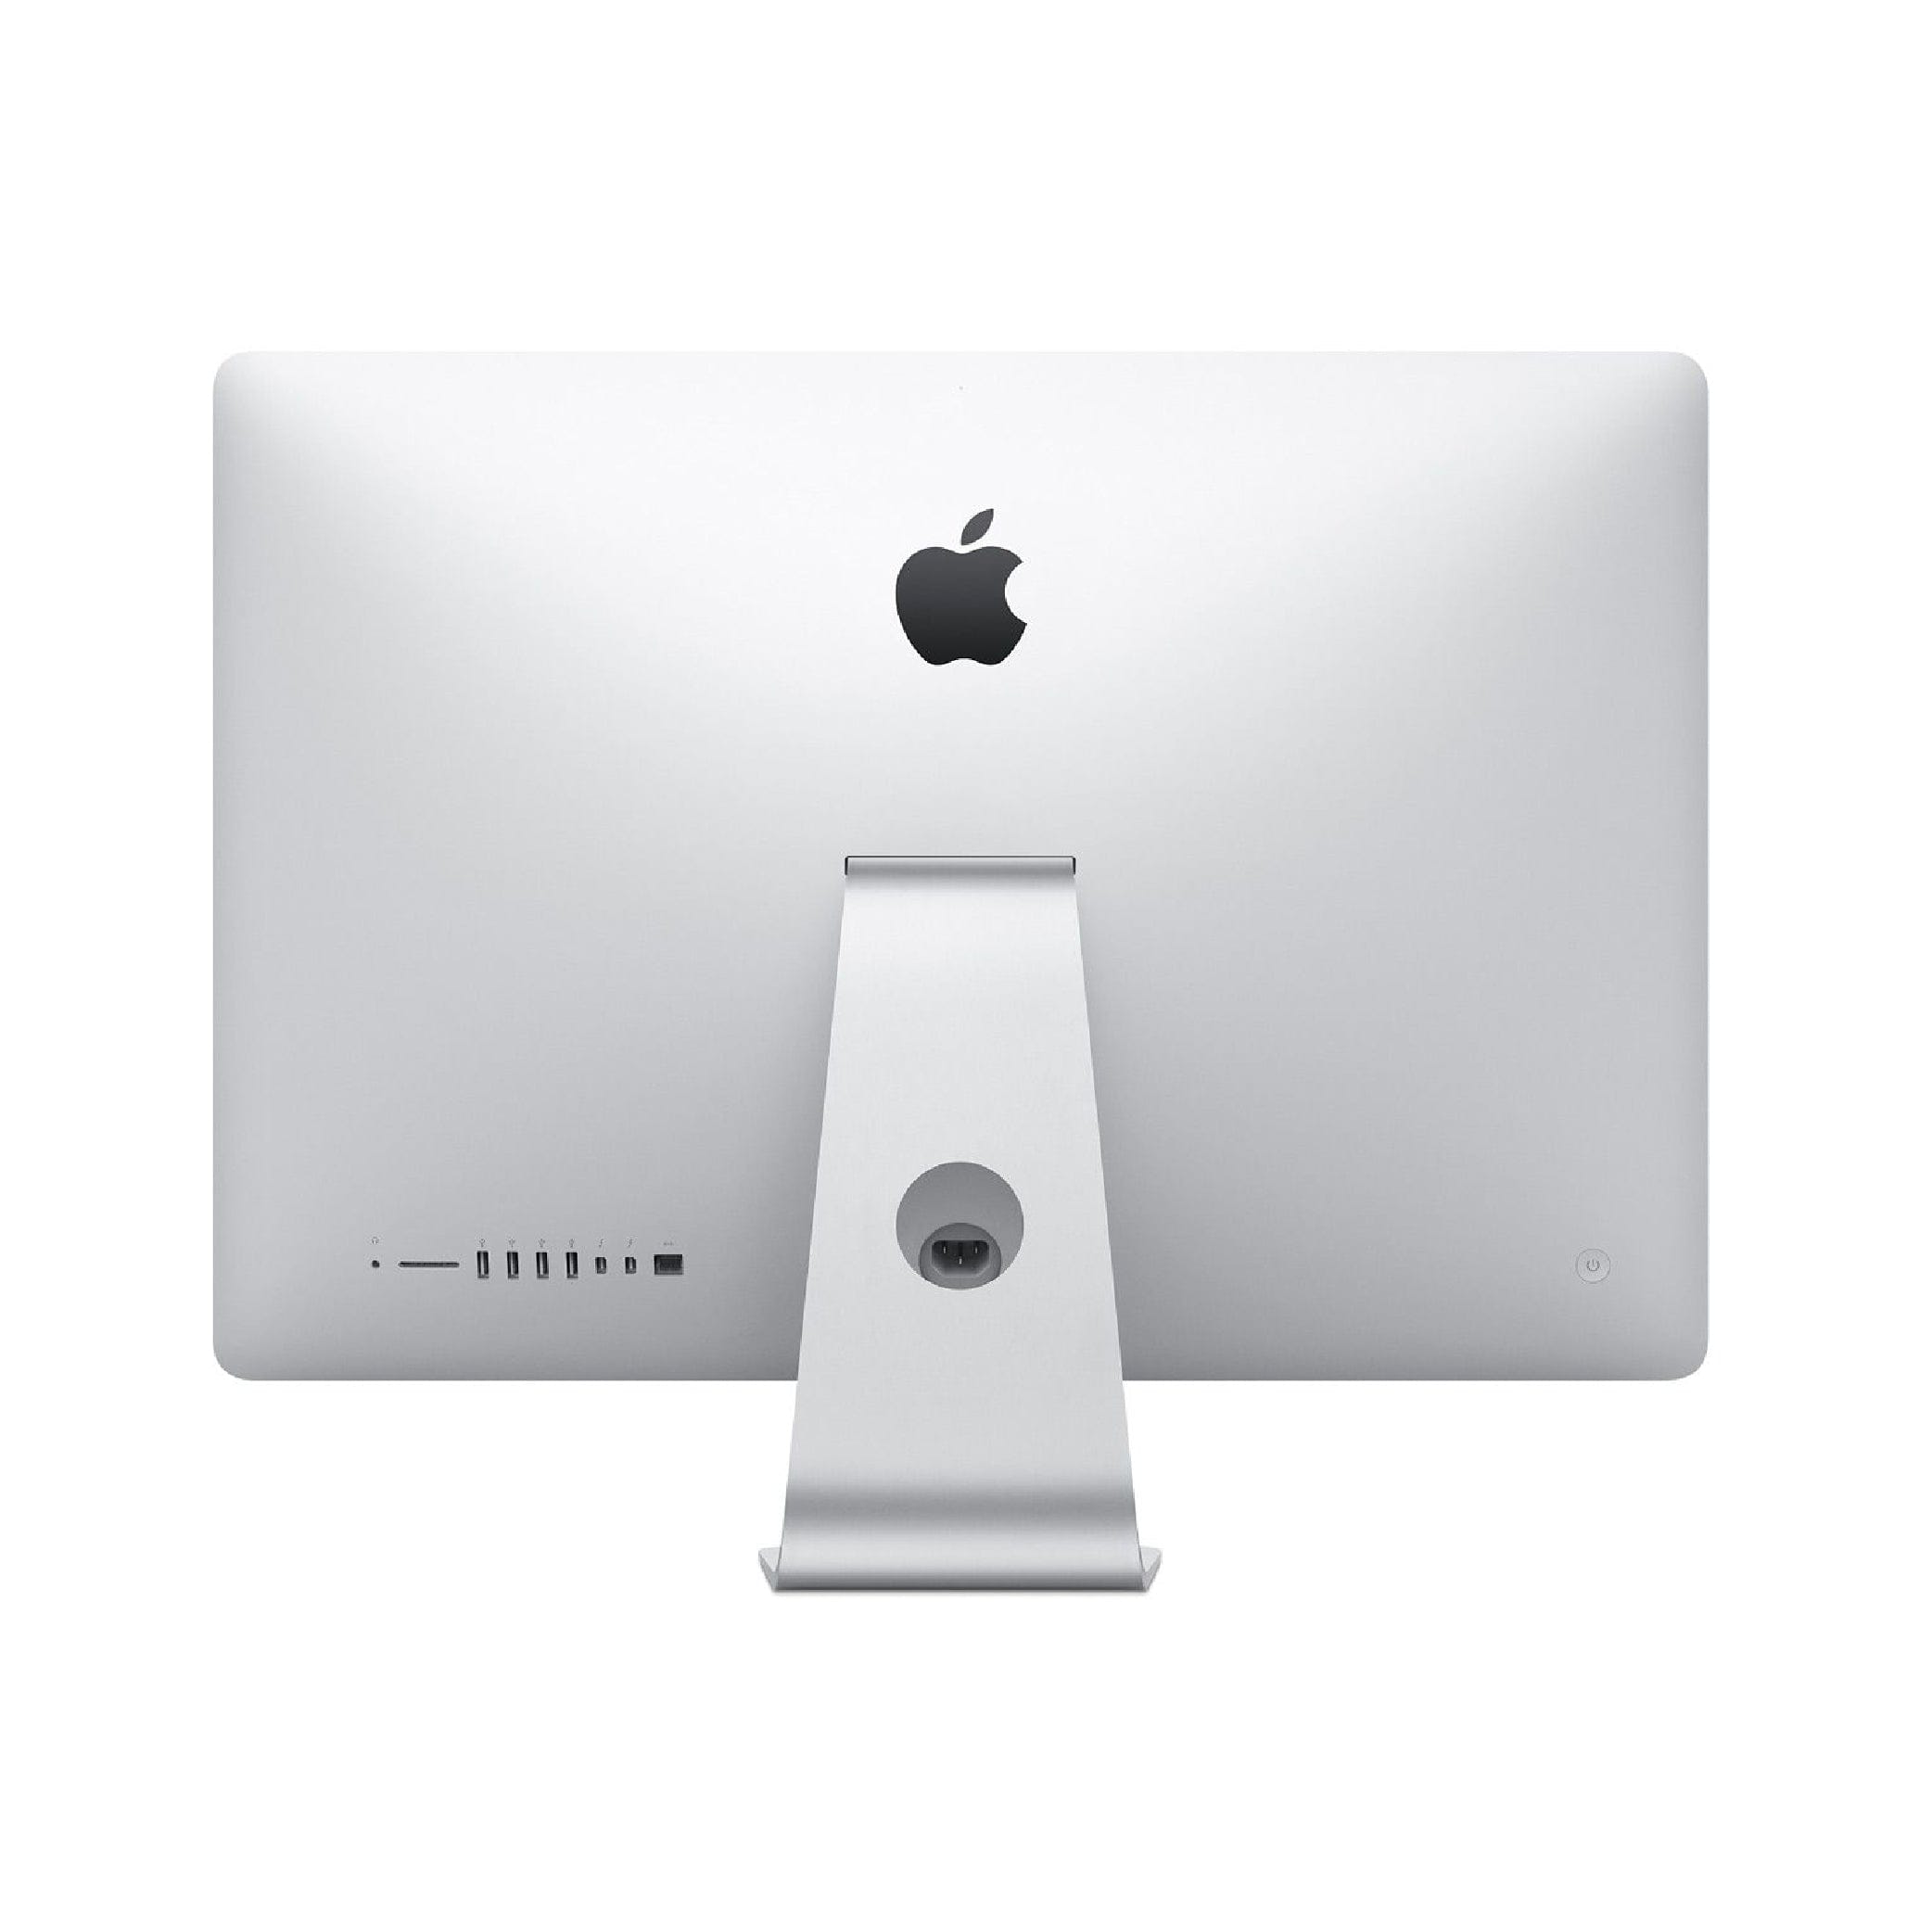 Apple - iMac 21.5" with Retina 4K display (2020) - Intel Core i3 - 8GB Memory - 256GB SSD - Silver - (MHK23LL/A)